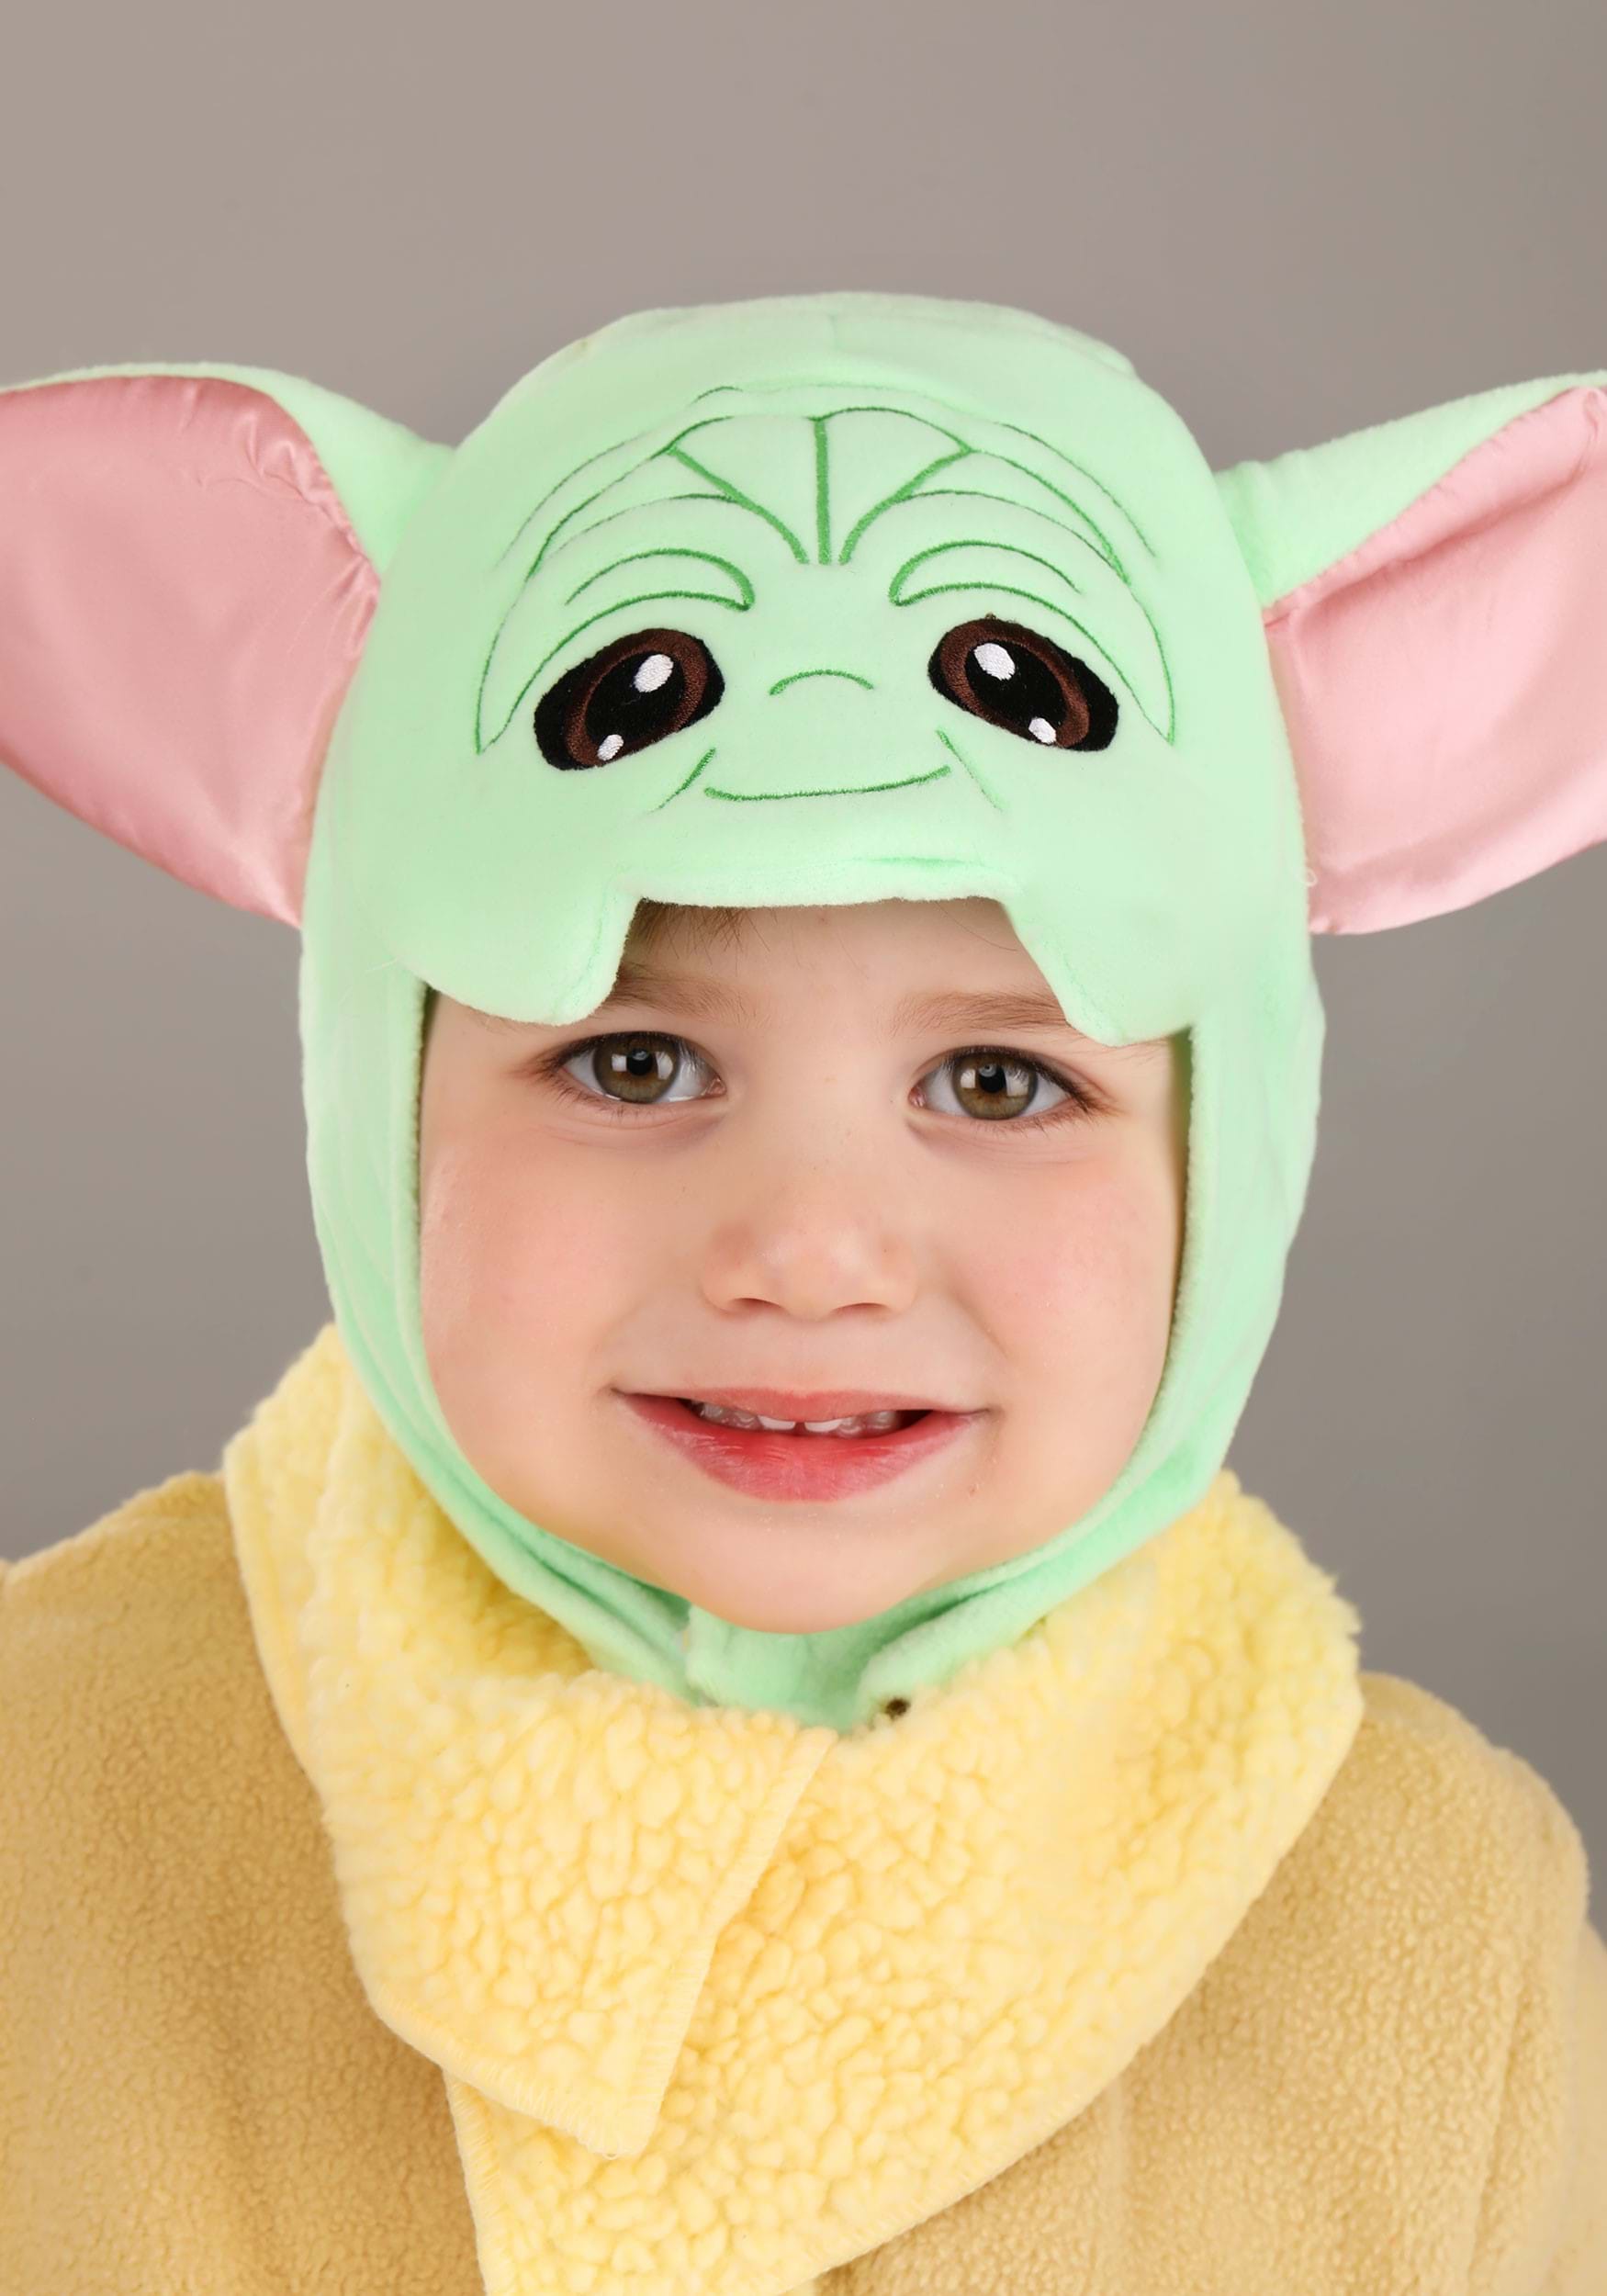 Baby Yoda Star Wars Costume Coat